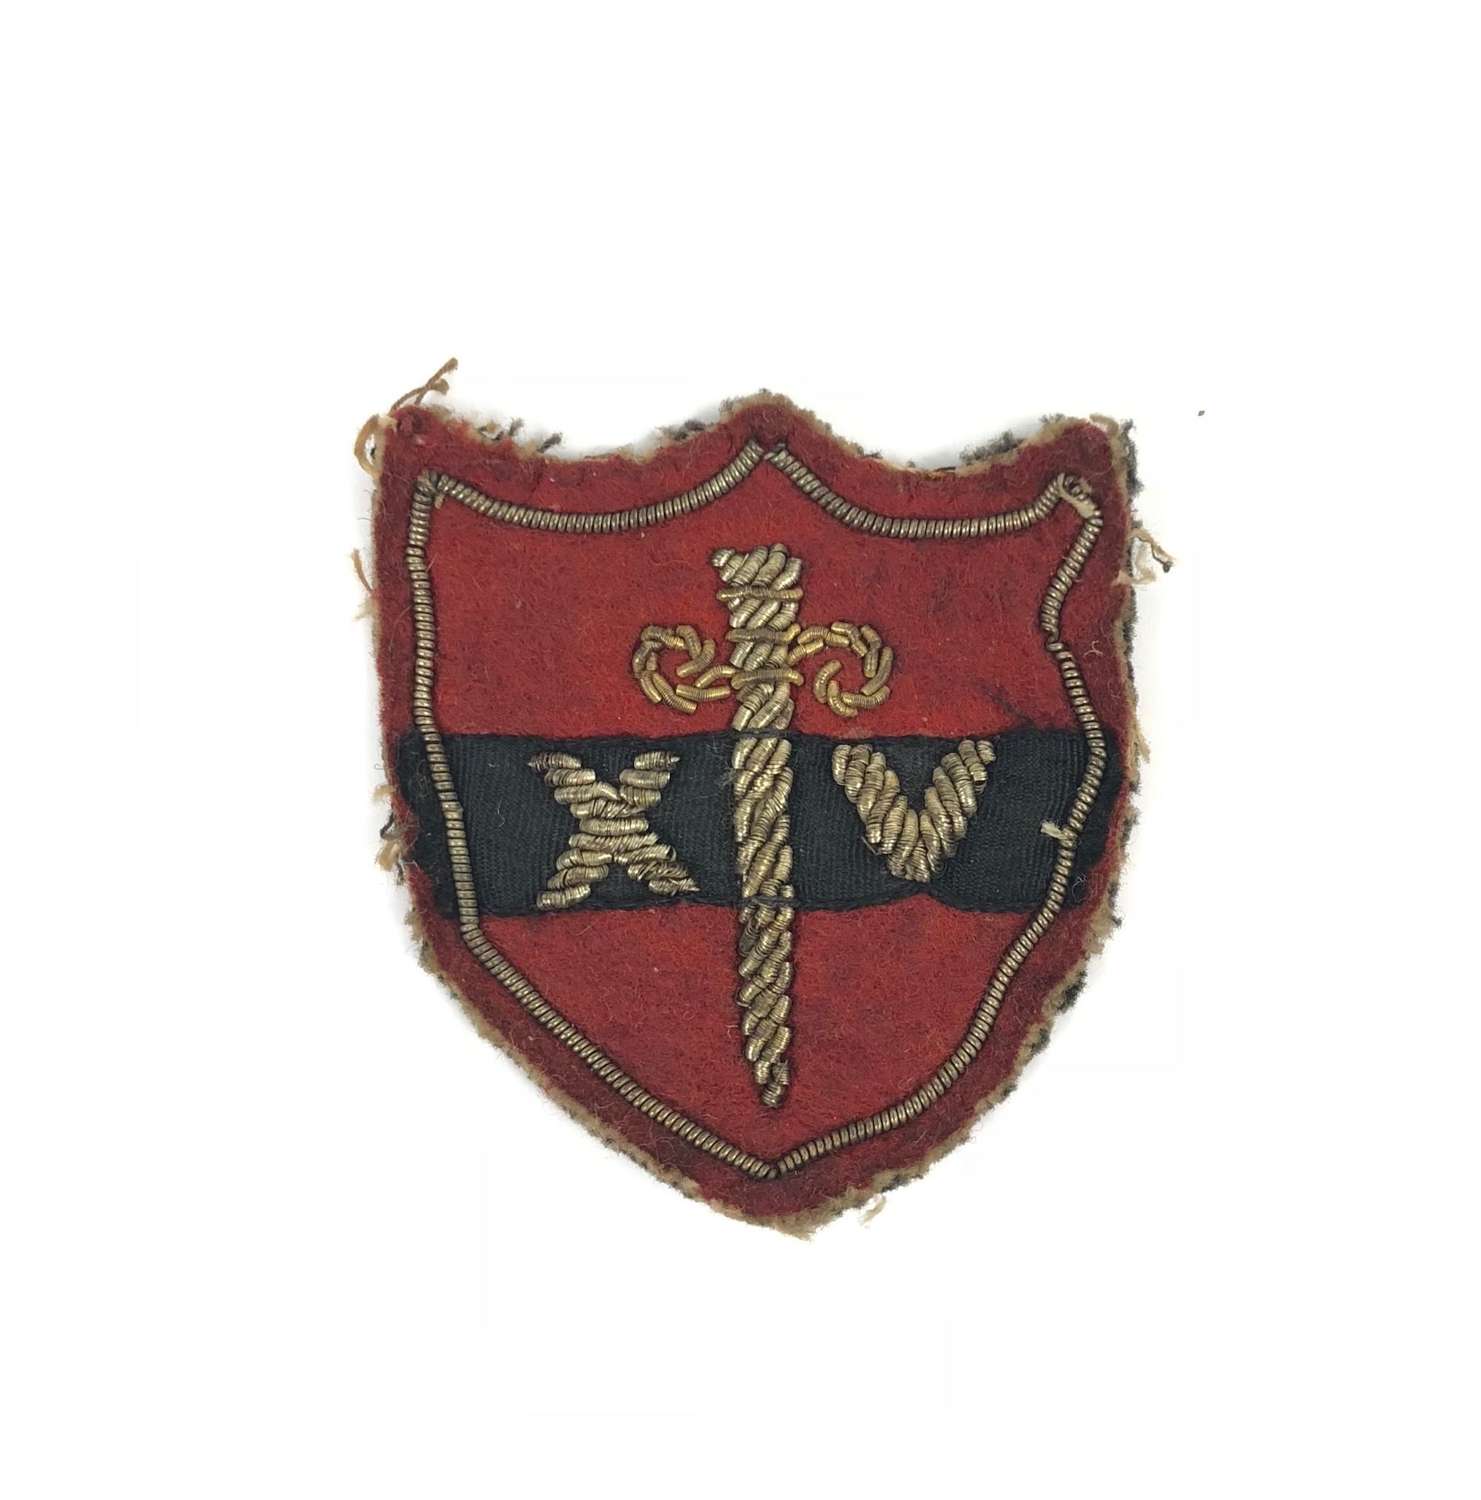 WW2 14th Army Far East Bullion Embroidered Formation Badge.